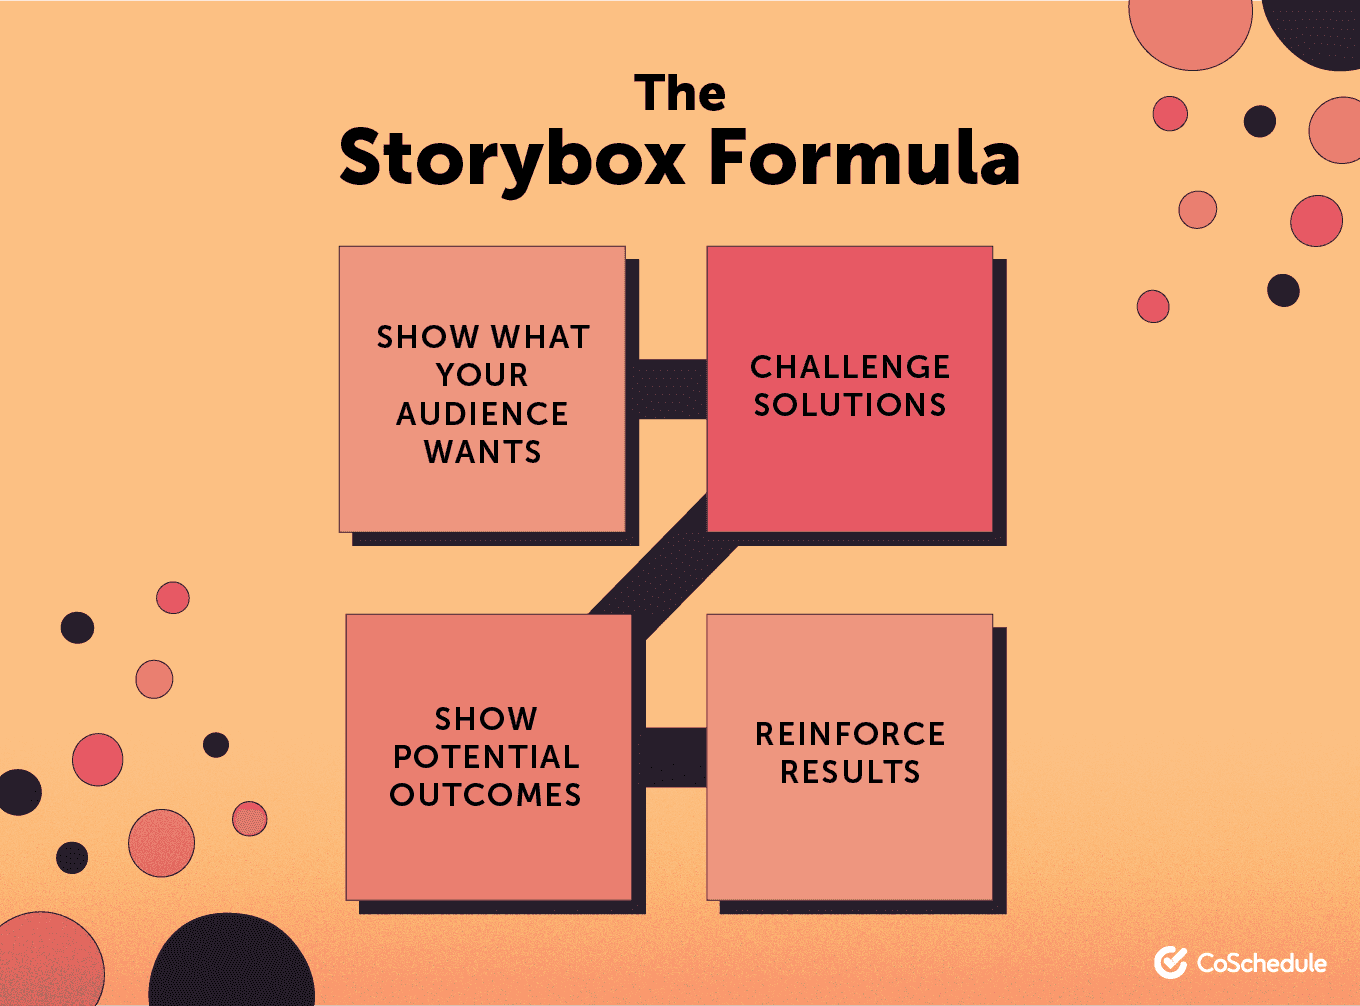 The storybox formula